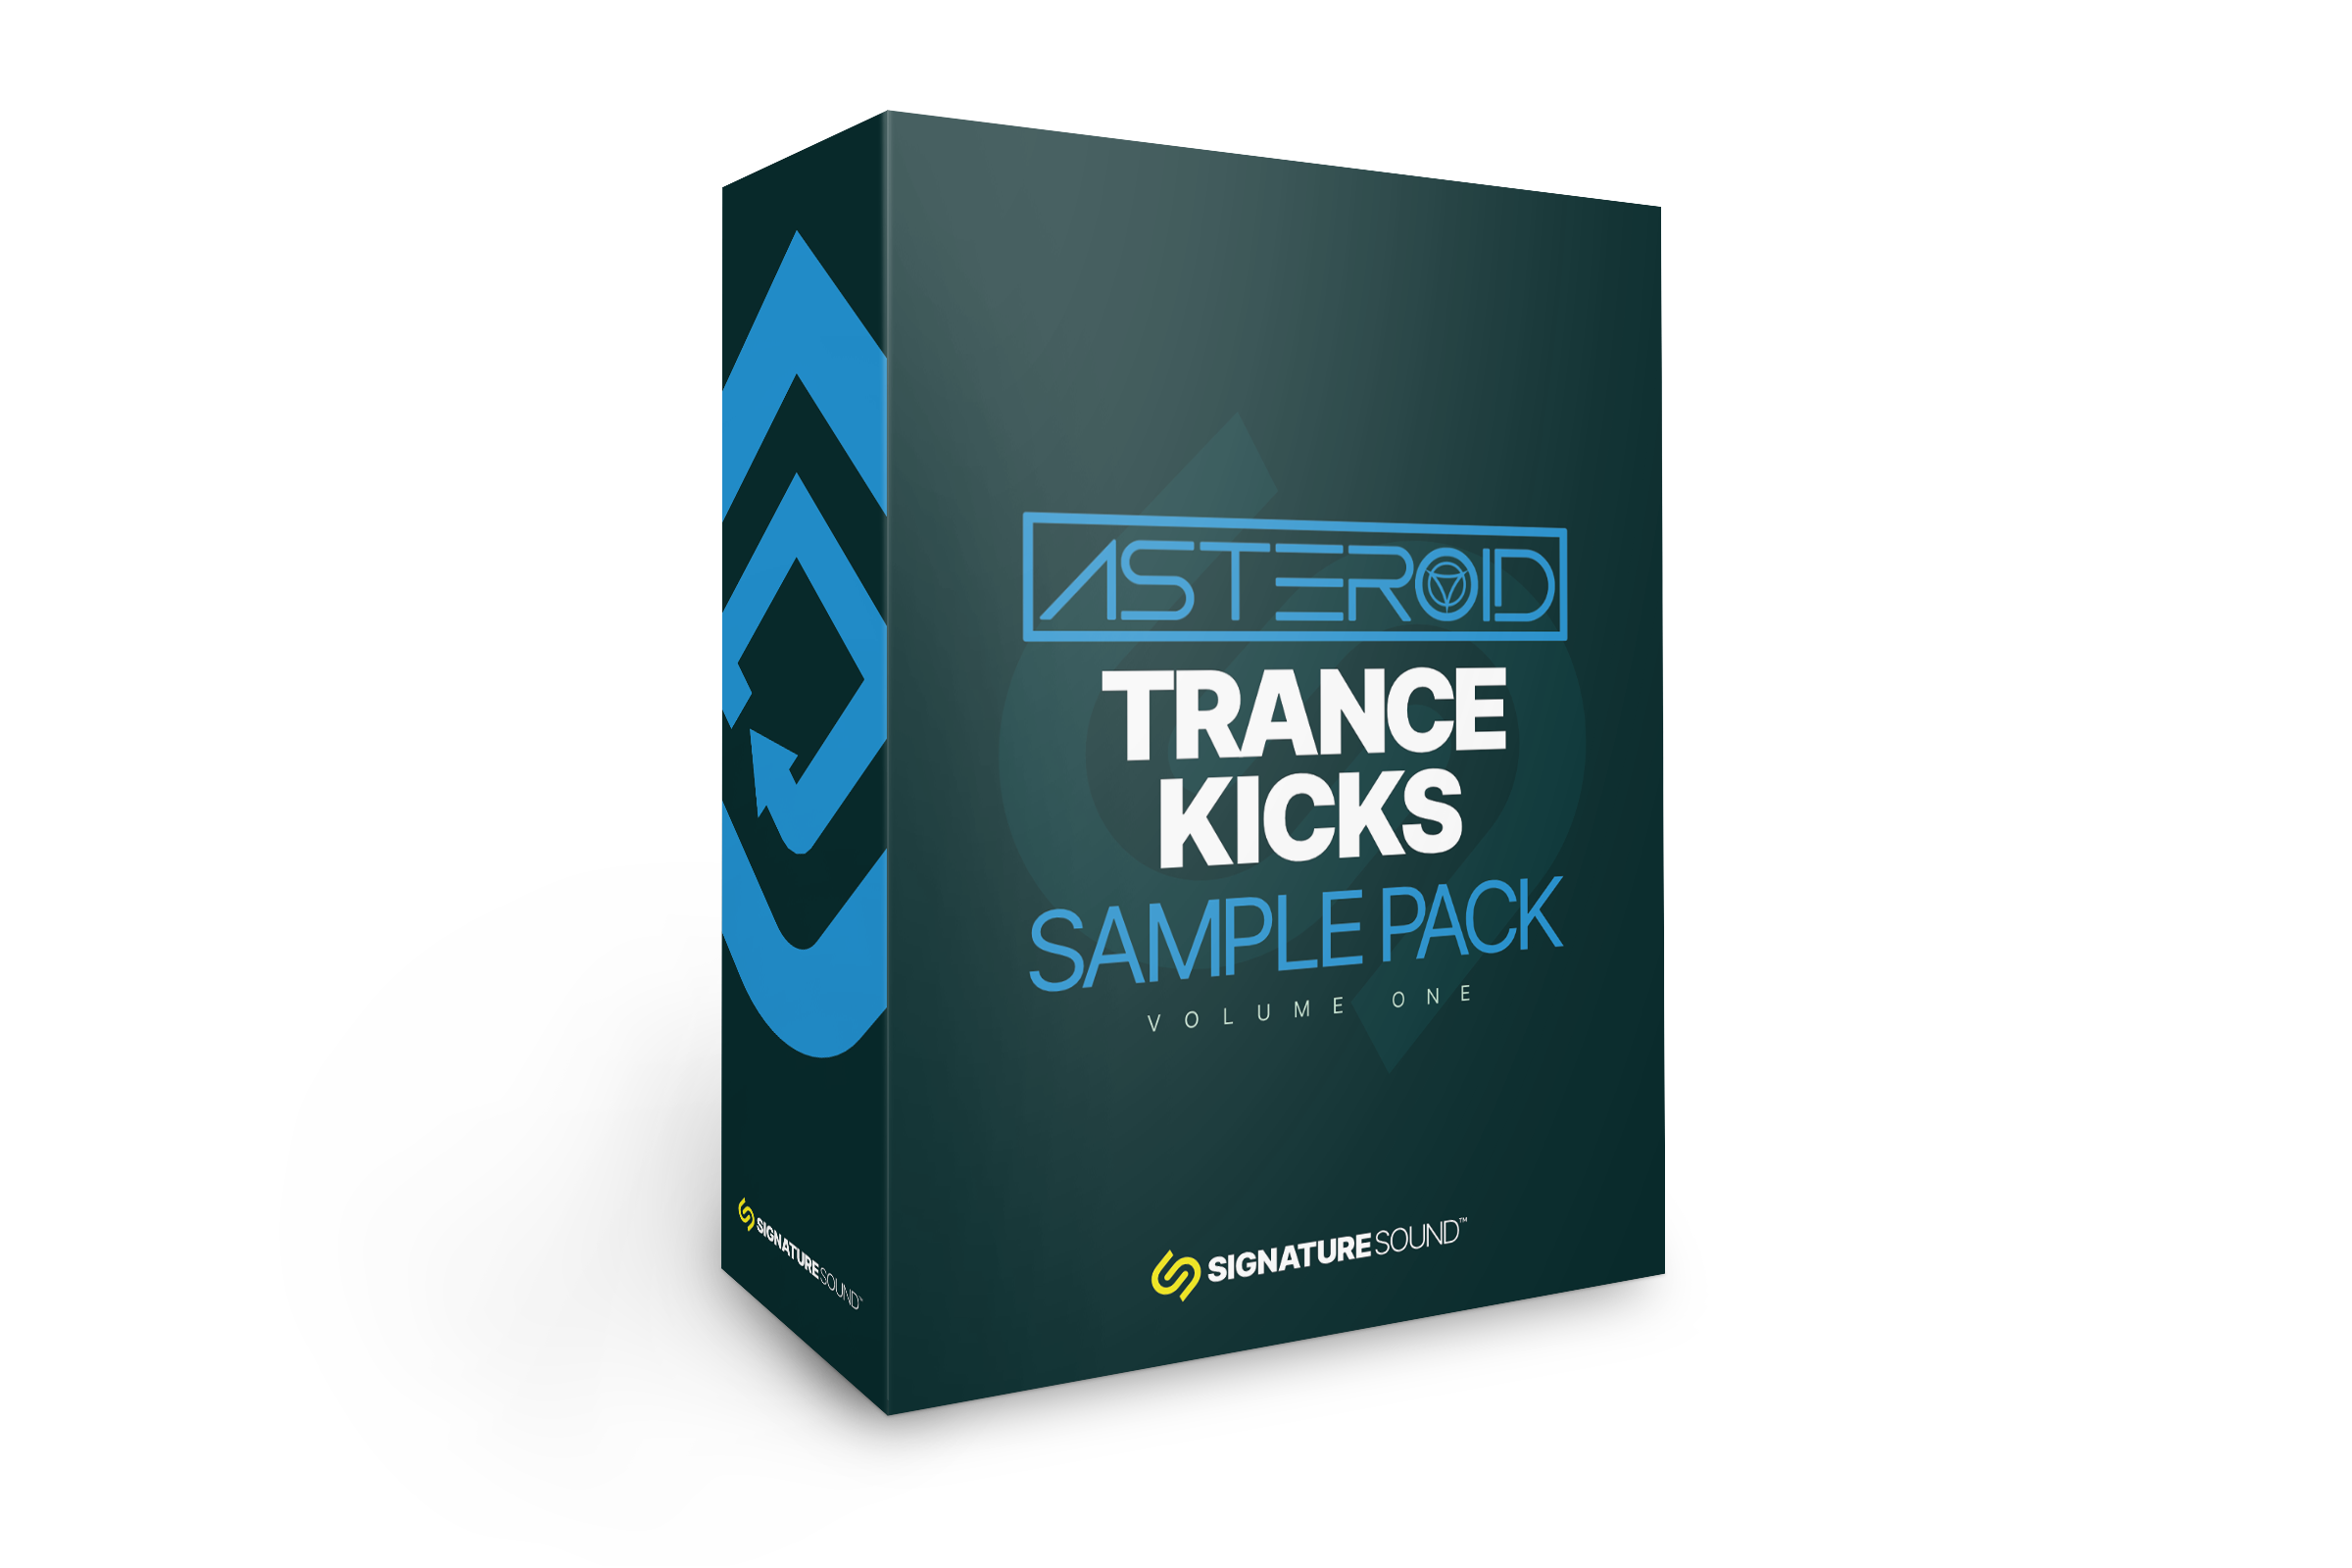 Asteroid Trance Kicks [Sample Pack] Volume One